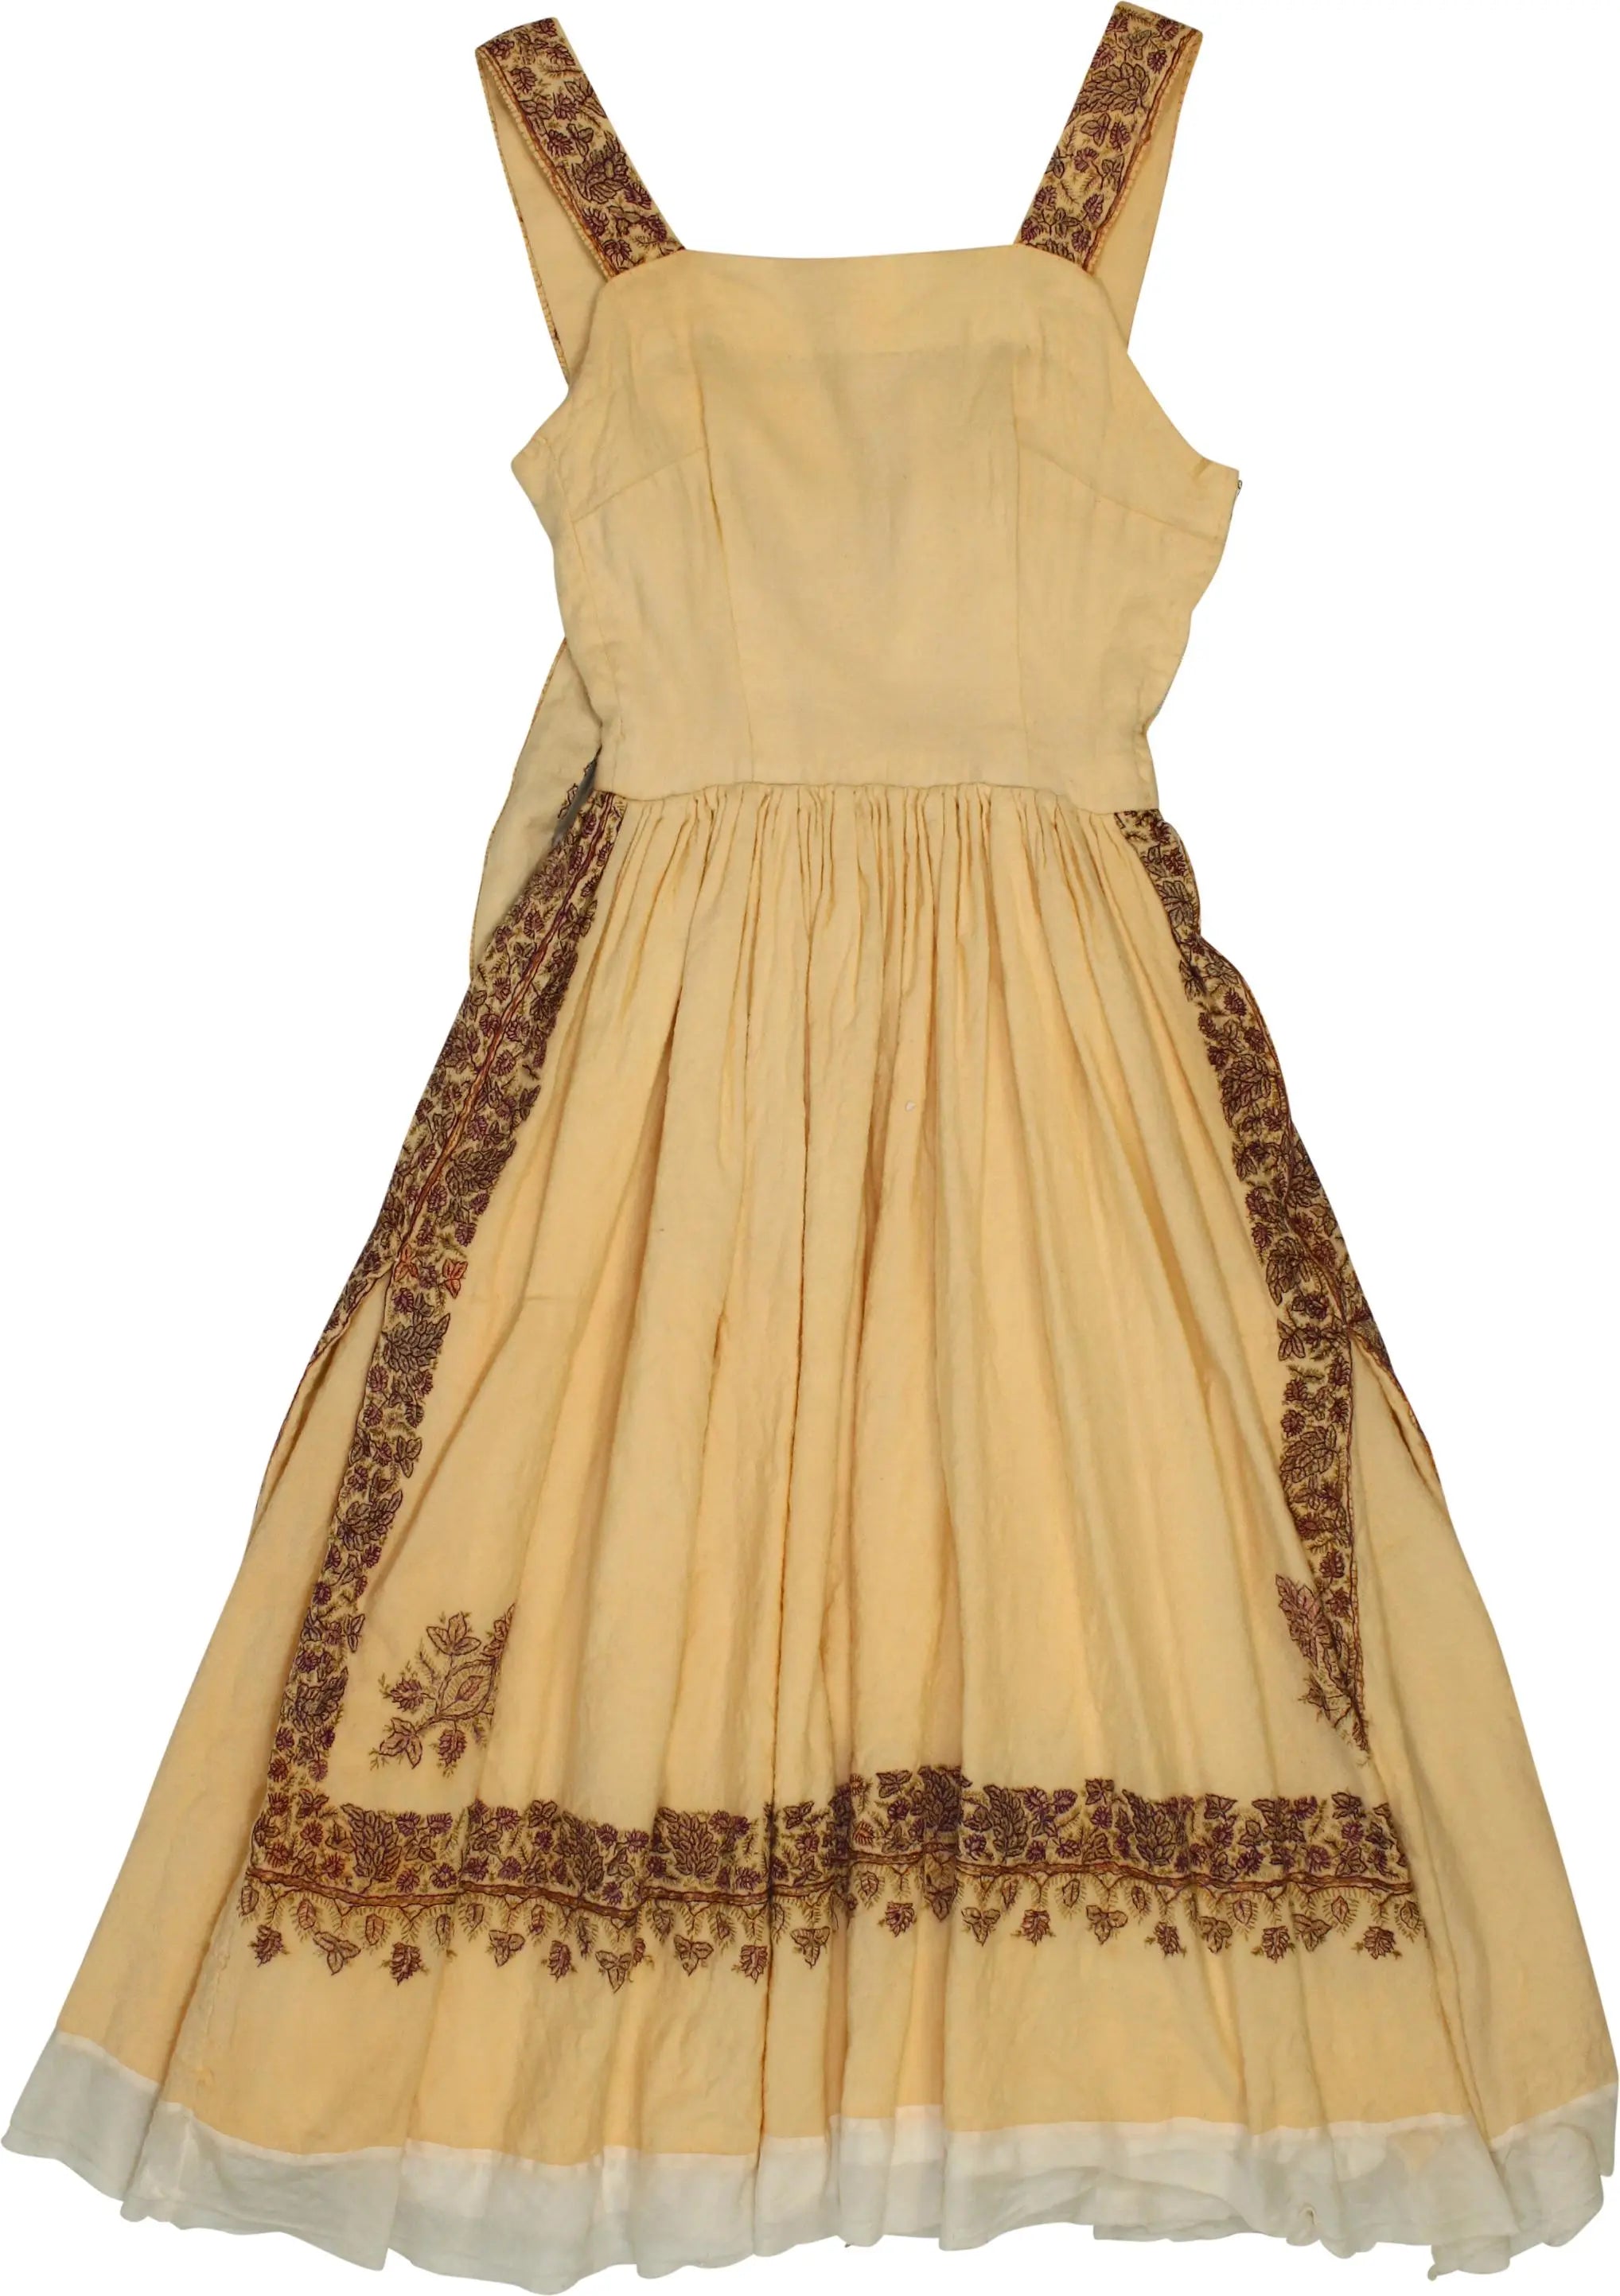 Handmade - Handmade Dress- ThriftTale.com - Vintage and second handclothing